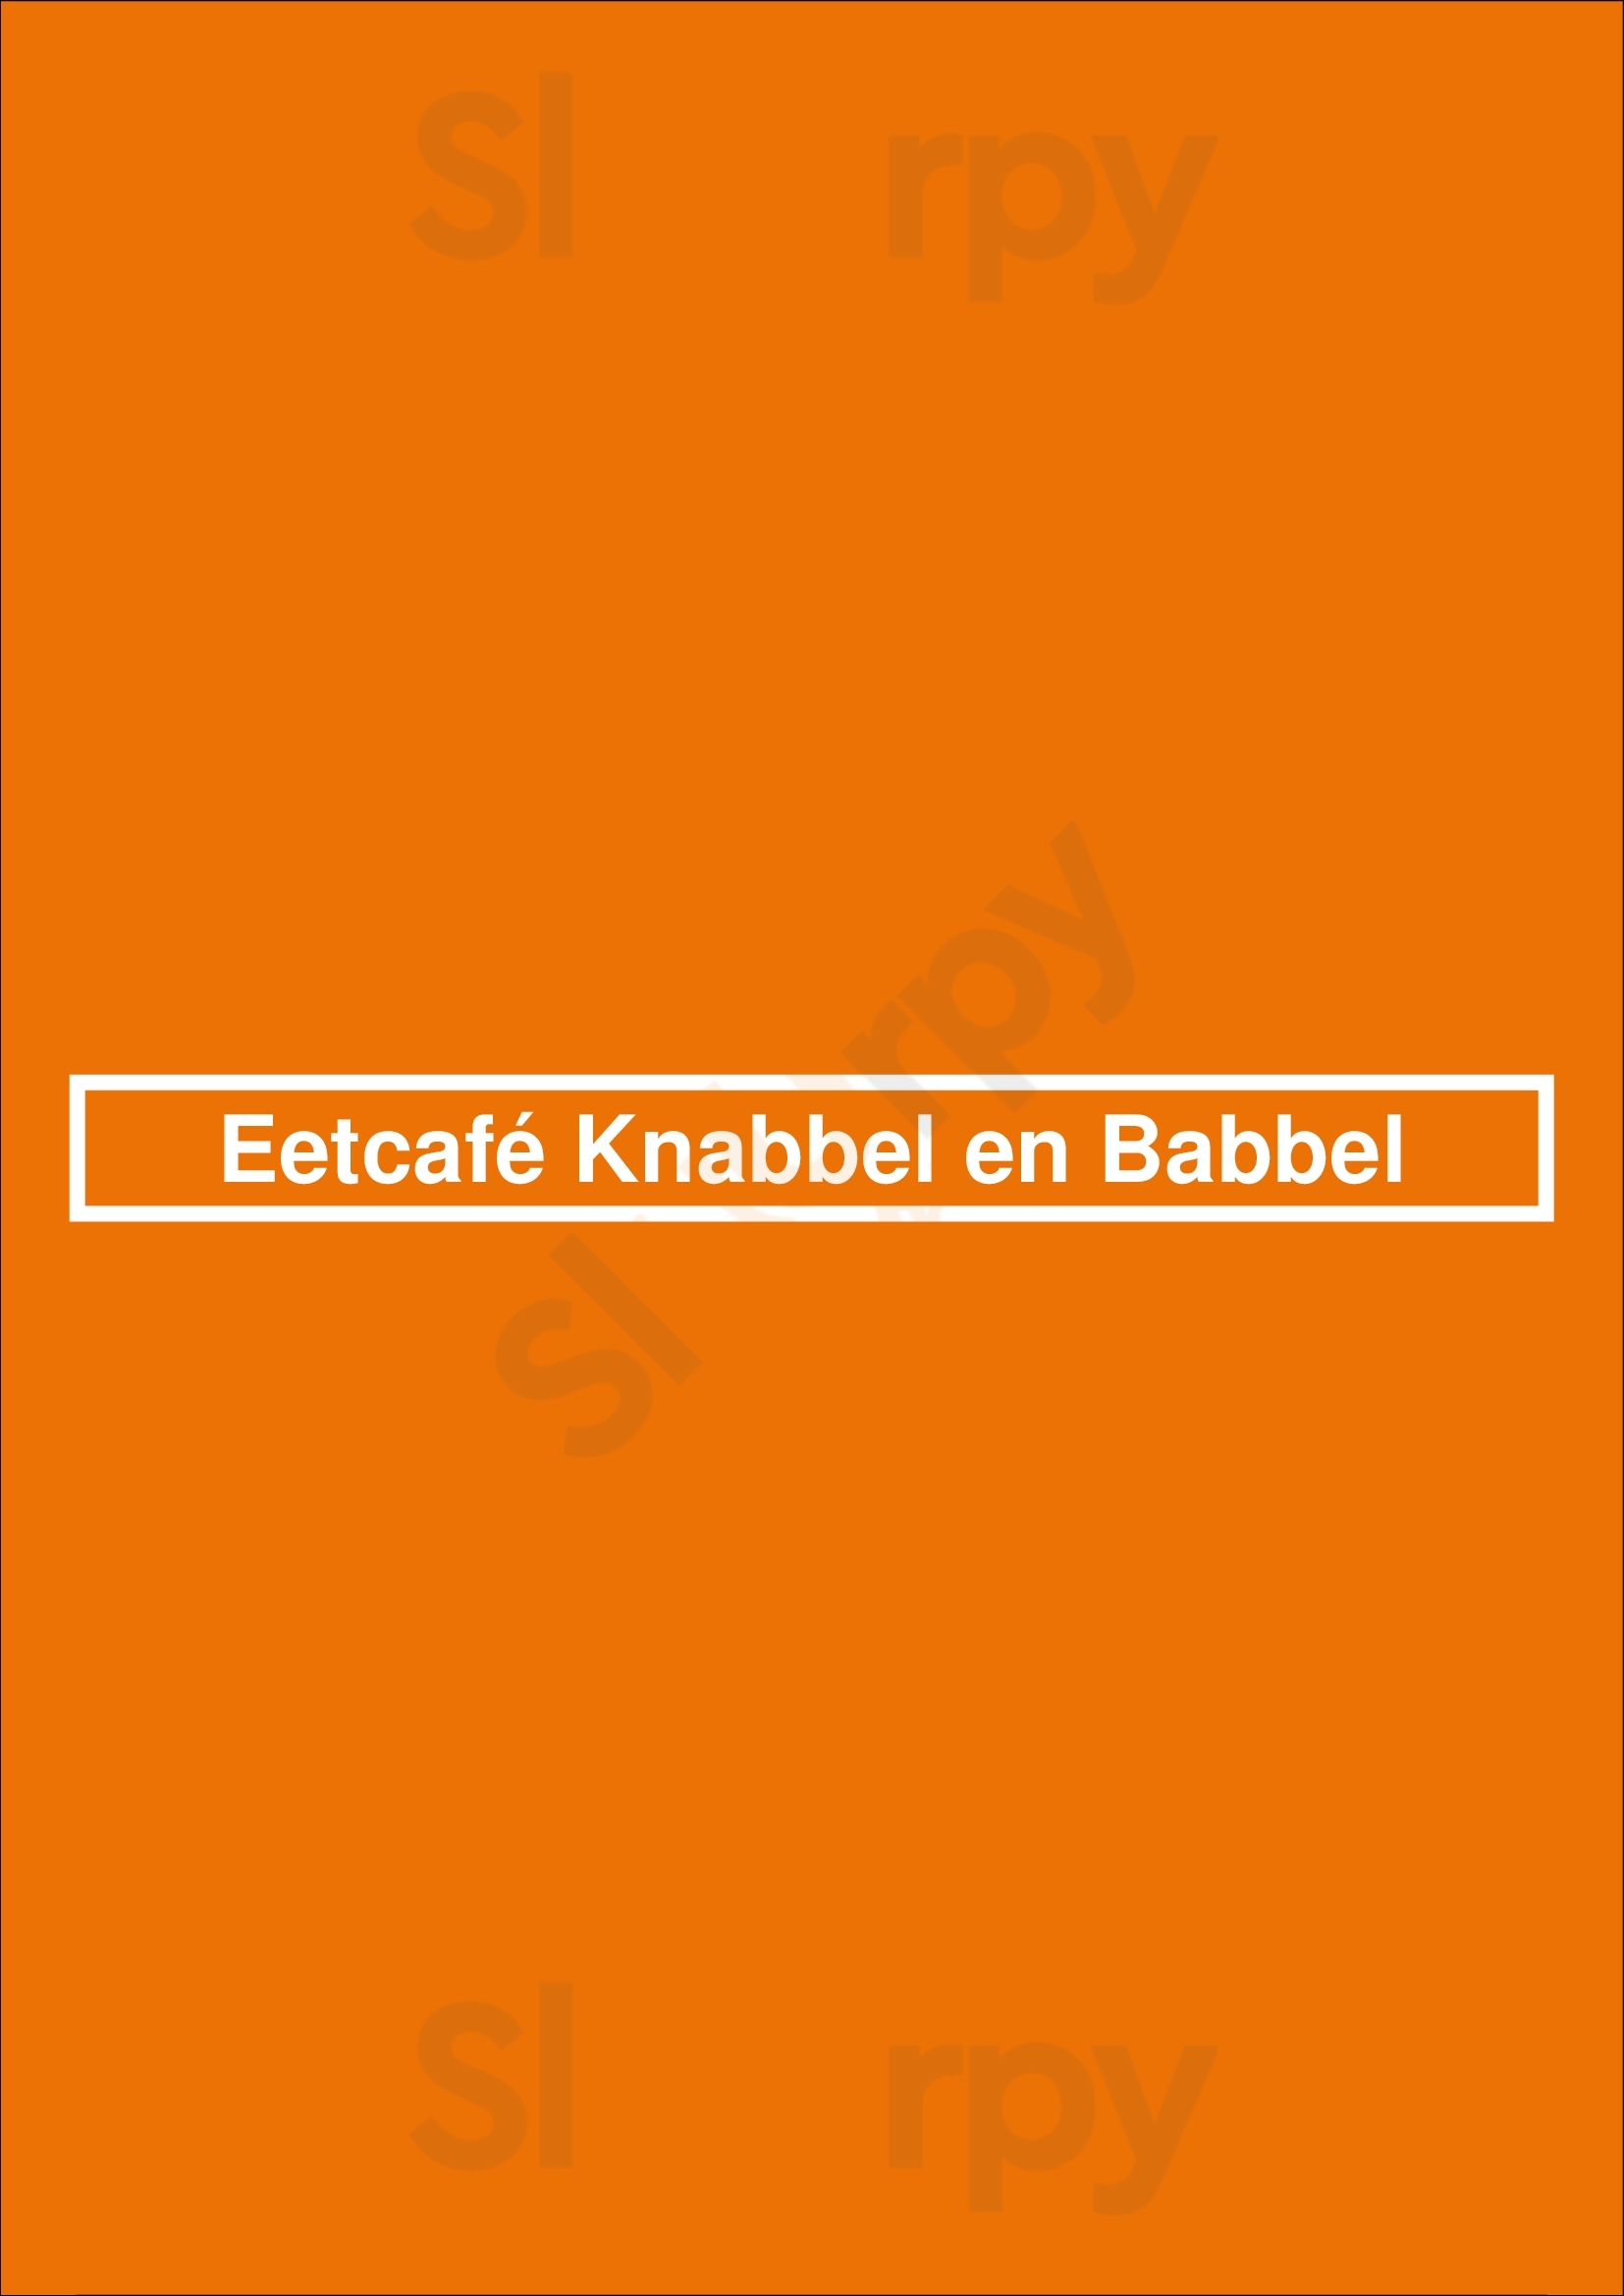 Eetcafé Knabbel En Babbel Amsterdam Menu - 1